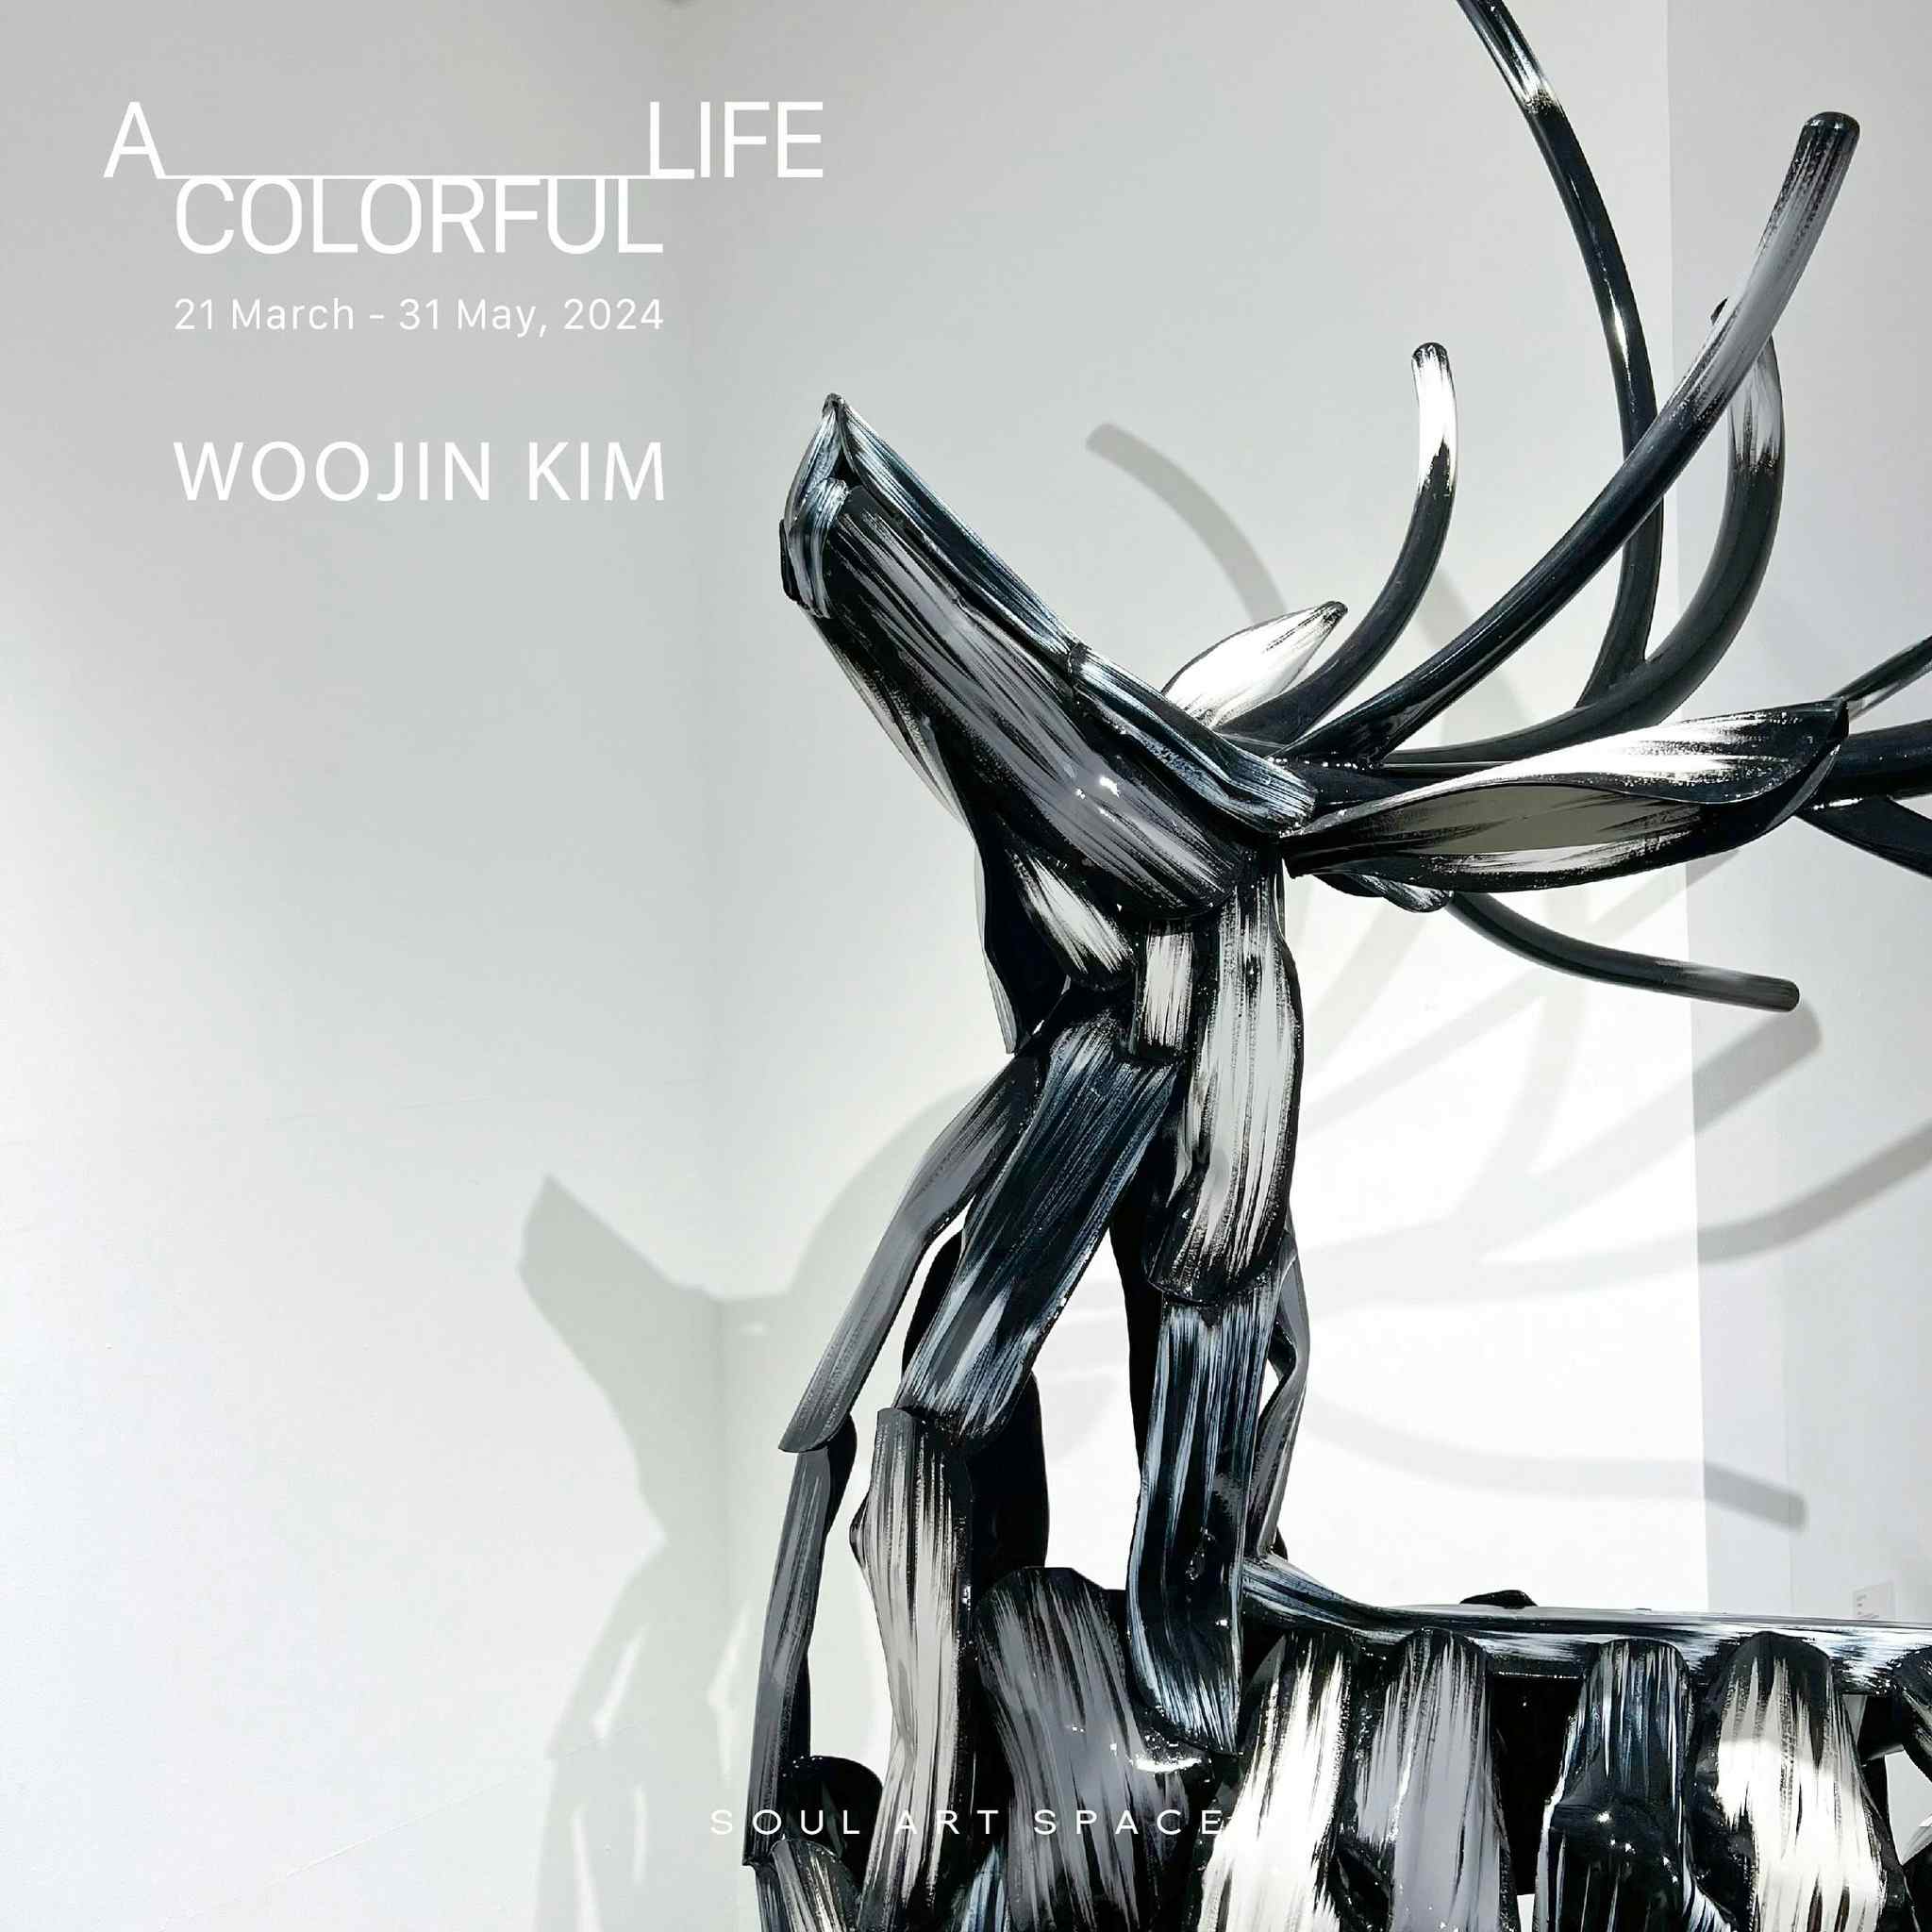 WOOJIN KIM: A COLORFUL LIFE